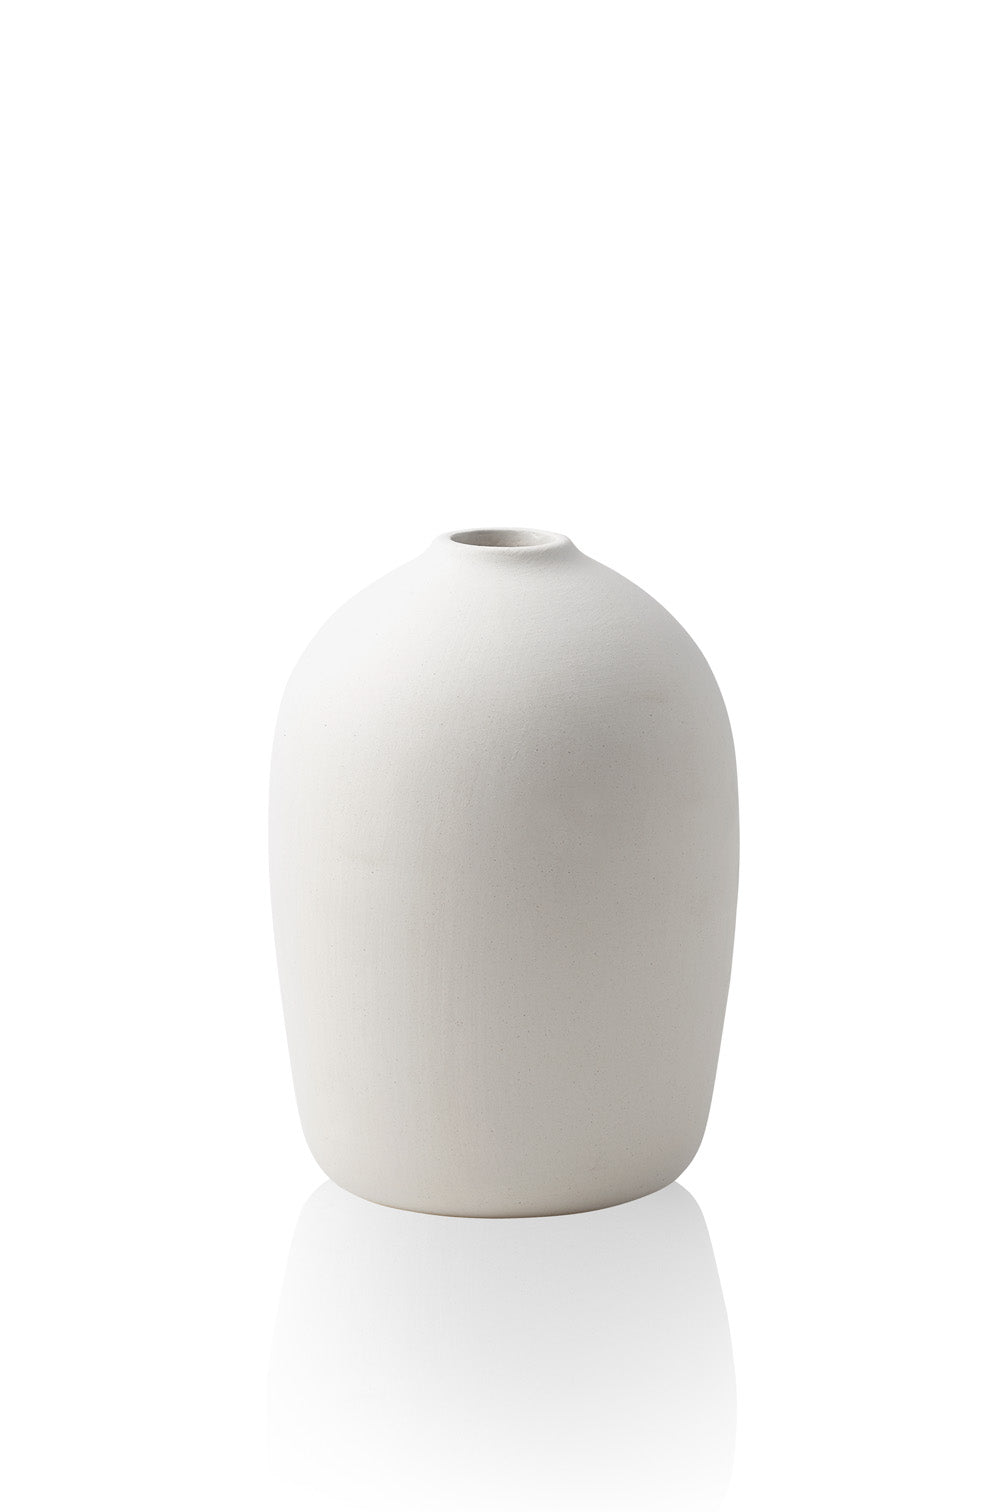 RAW keramik vase lille - hvid